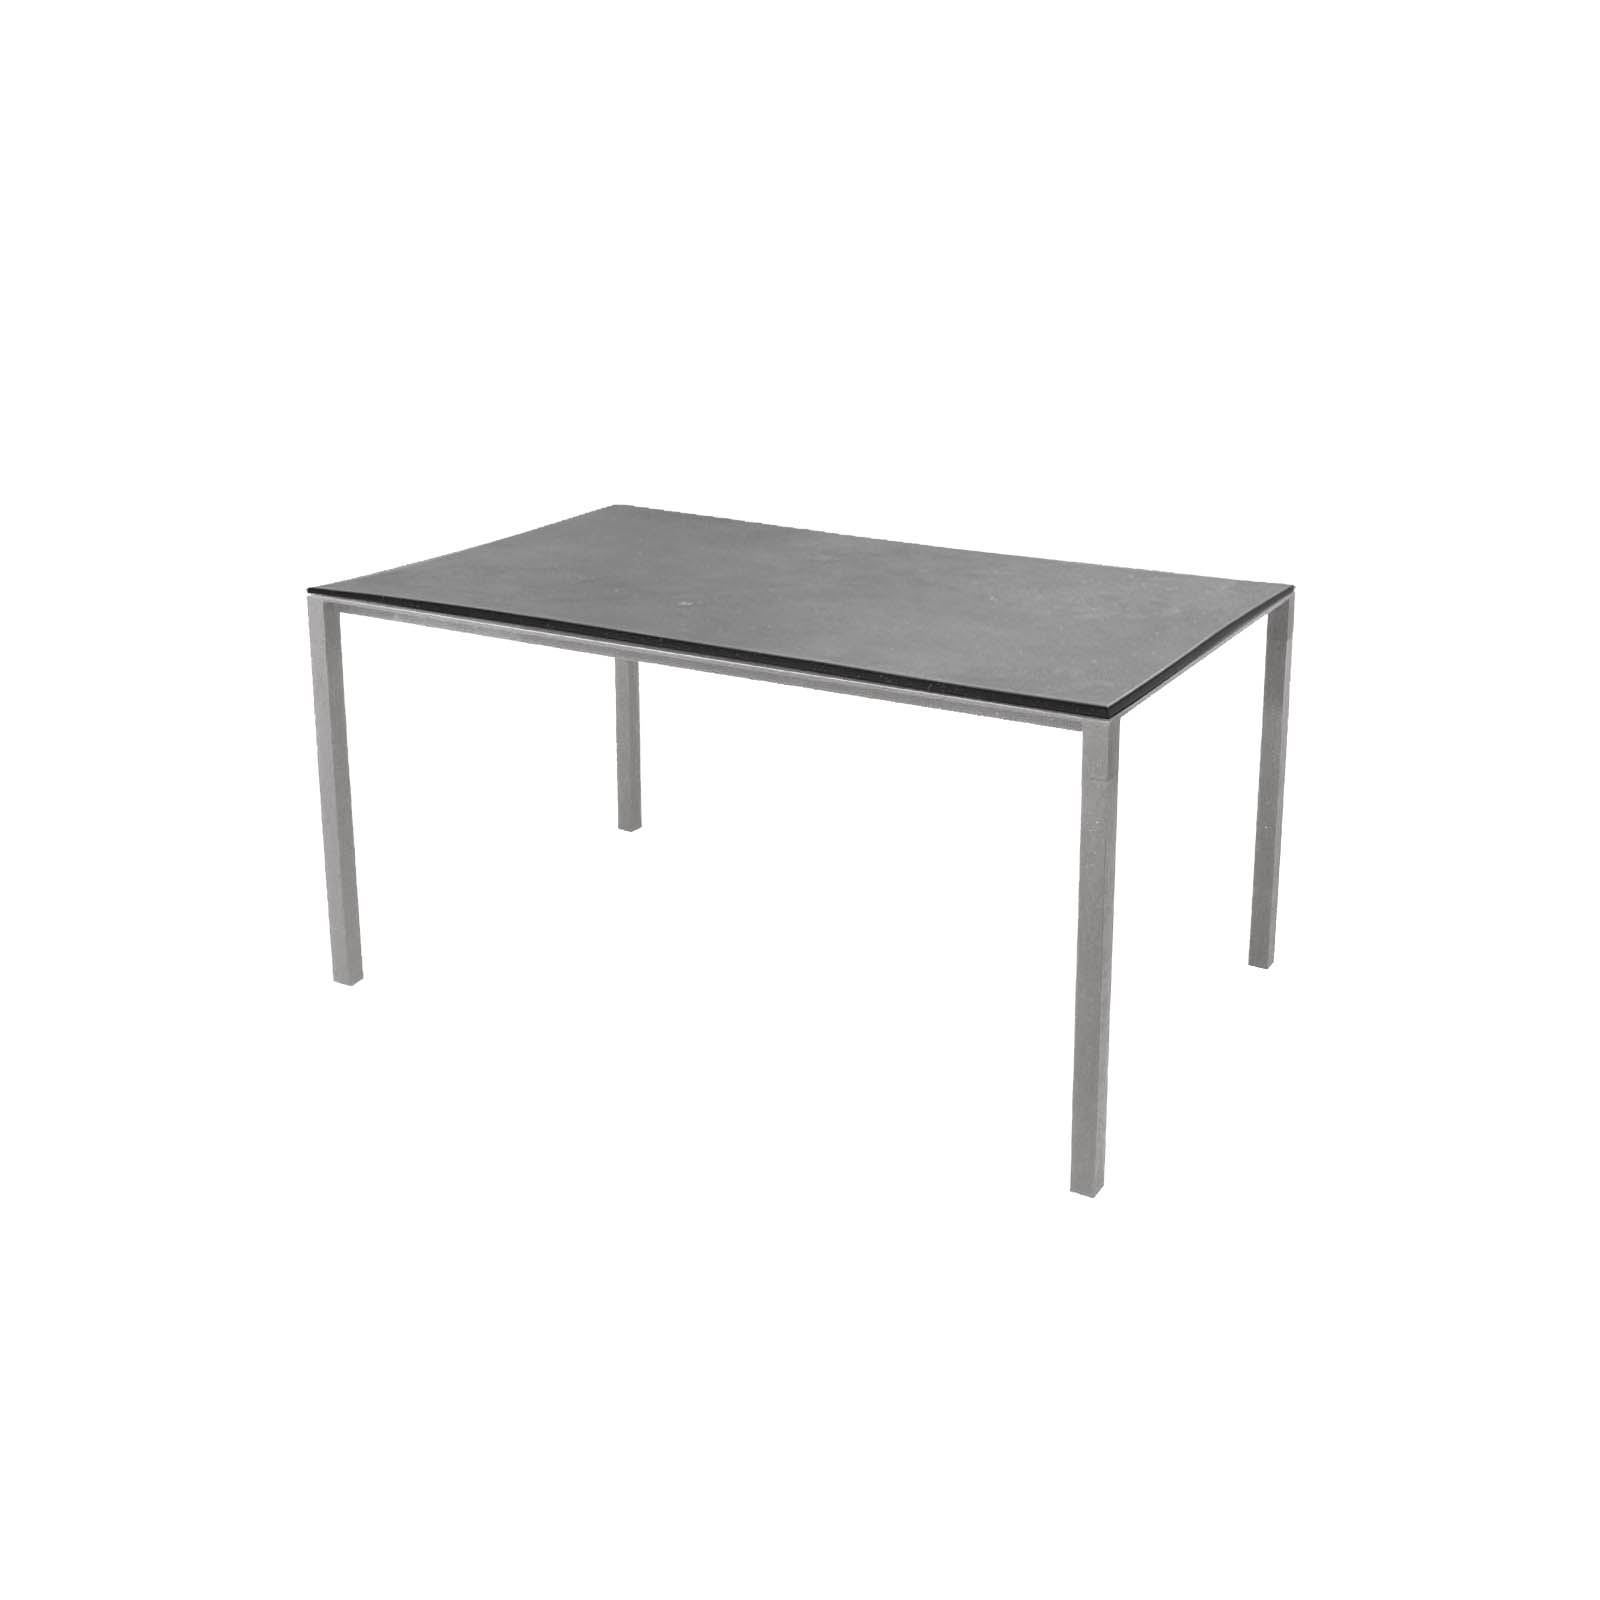 Tisch 150x90 cm Pure aus Aluminium in Light Grey mit Tischplatte aus Ceramic in Fossil Black